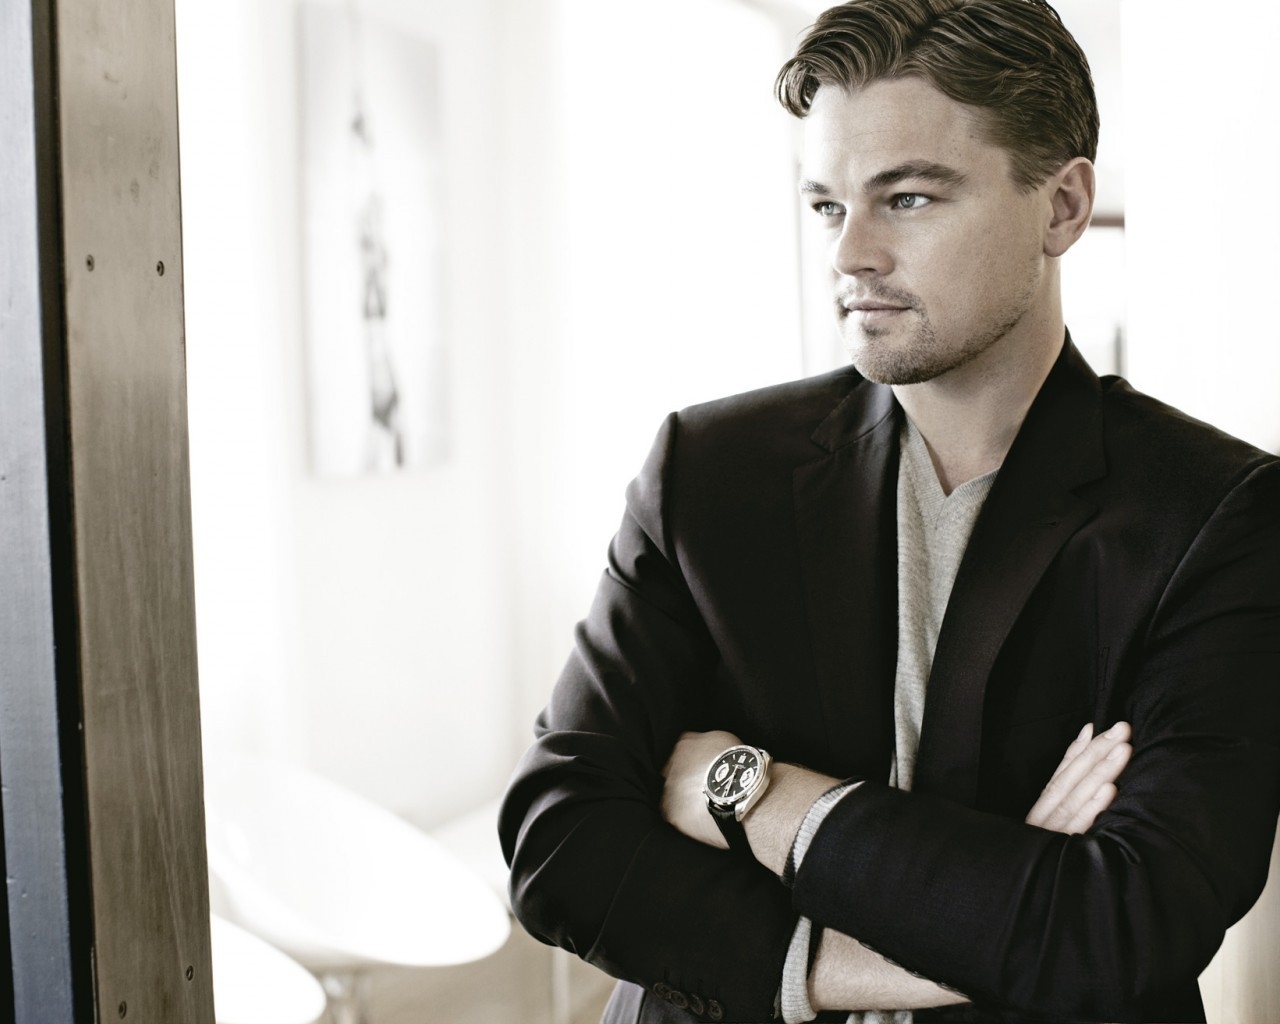 Leonardo DiCaprio Profile Look for 1280 x 1024 resolution